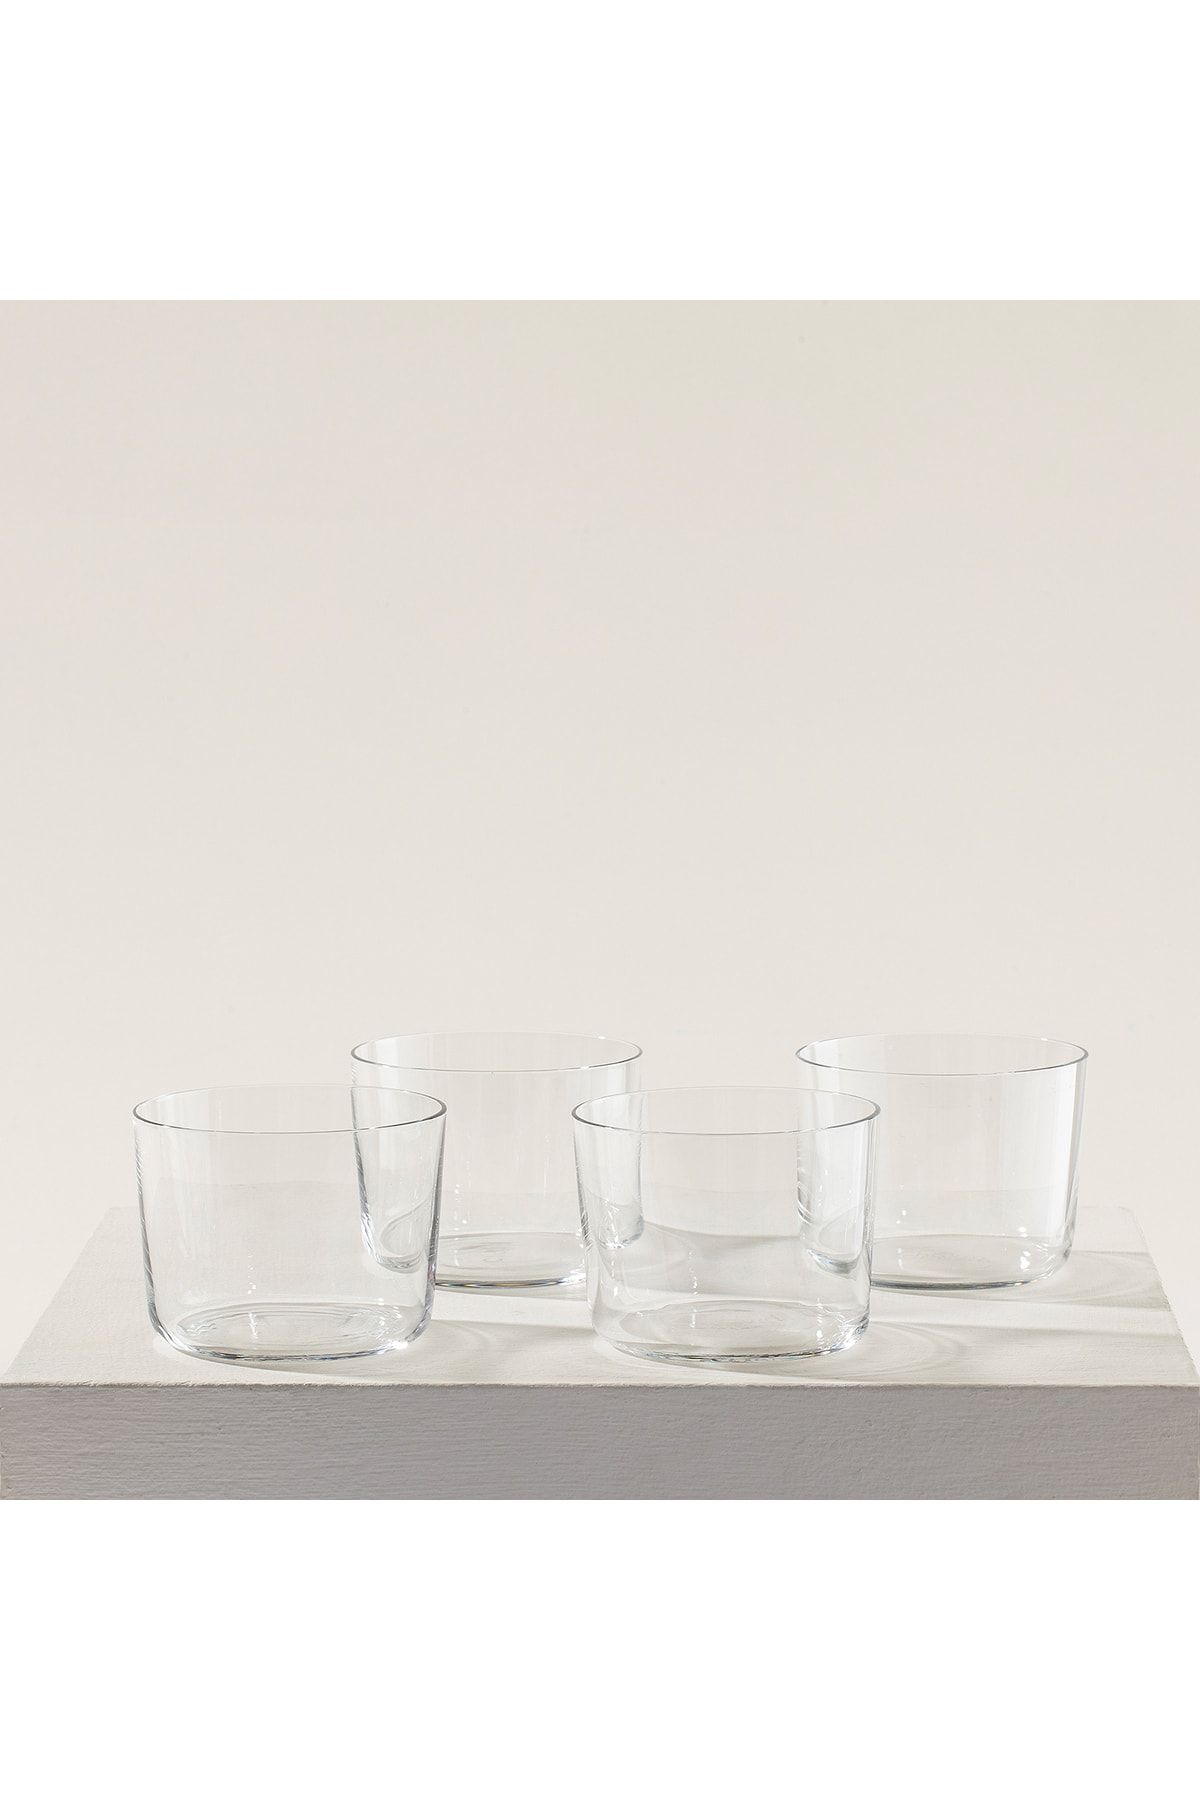 Chakra Elysee Su Bardağı 190 Ml 4'lü Set Standart